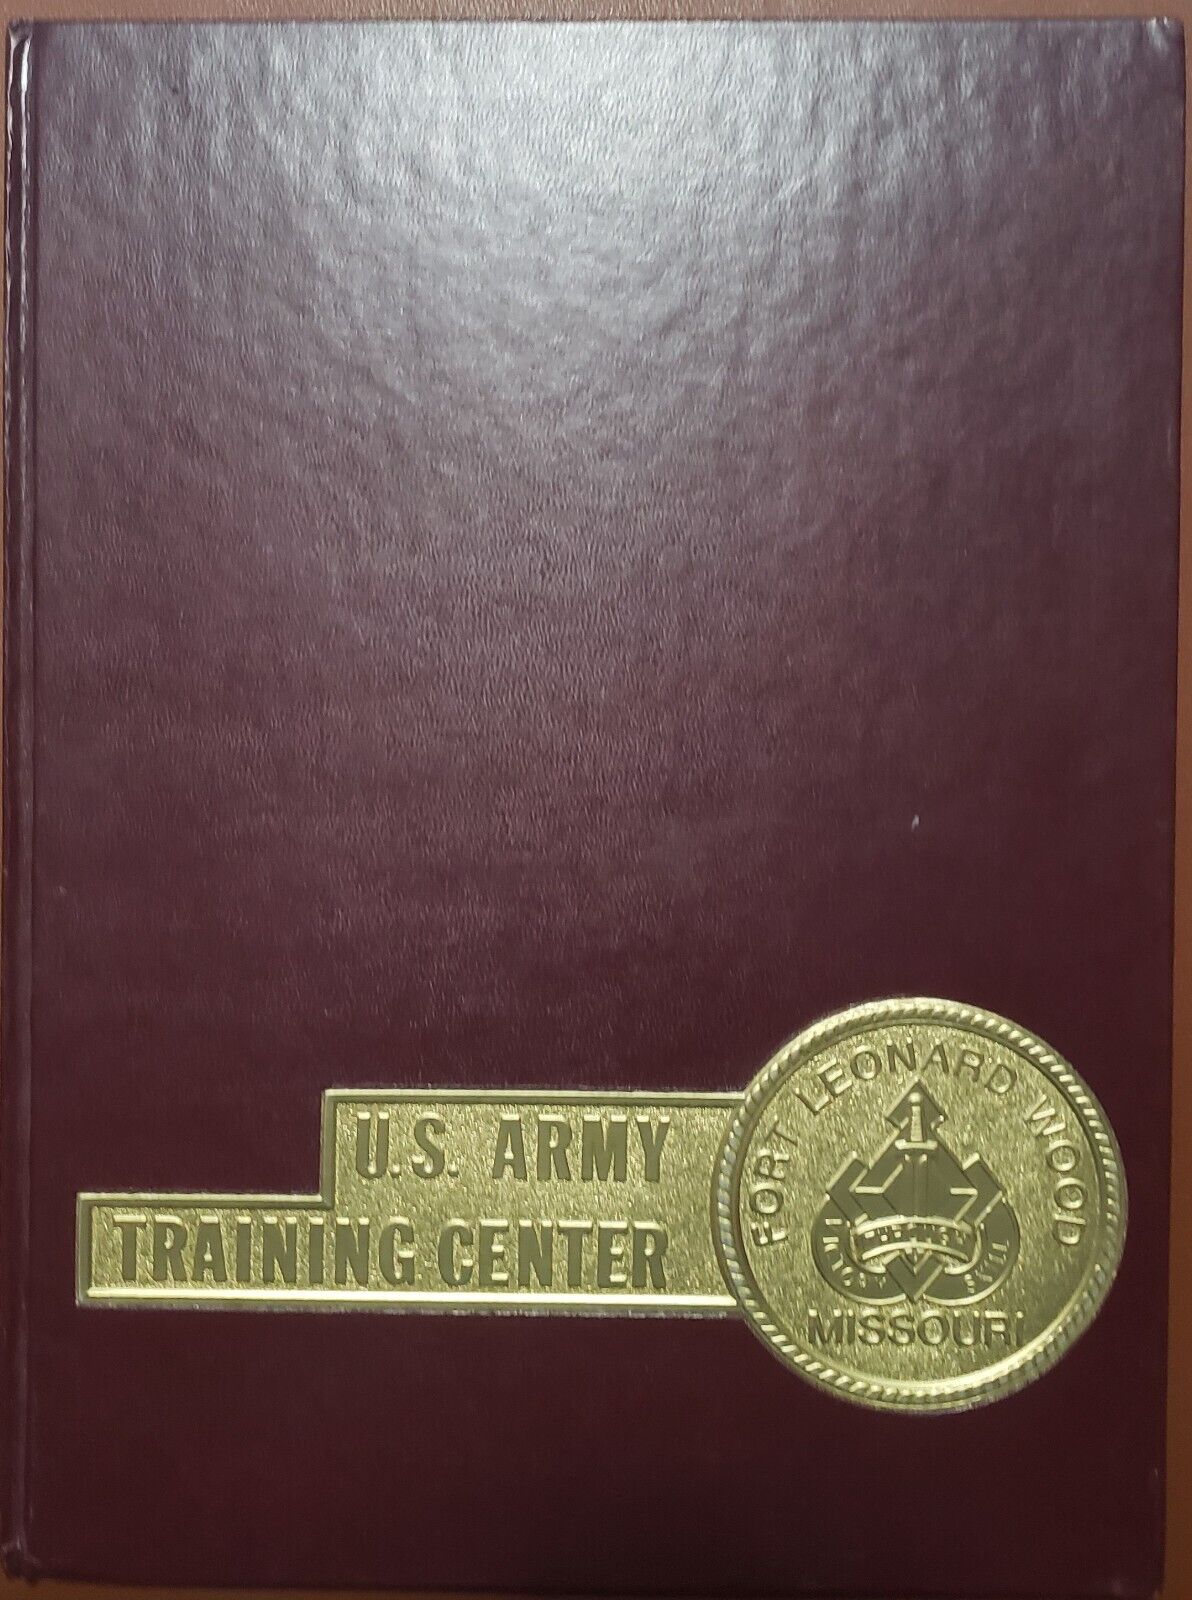 Fort Leonard Wood U.S. Army Training Center Yearbook 3rd Brig 2nd Batt Co E 1983